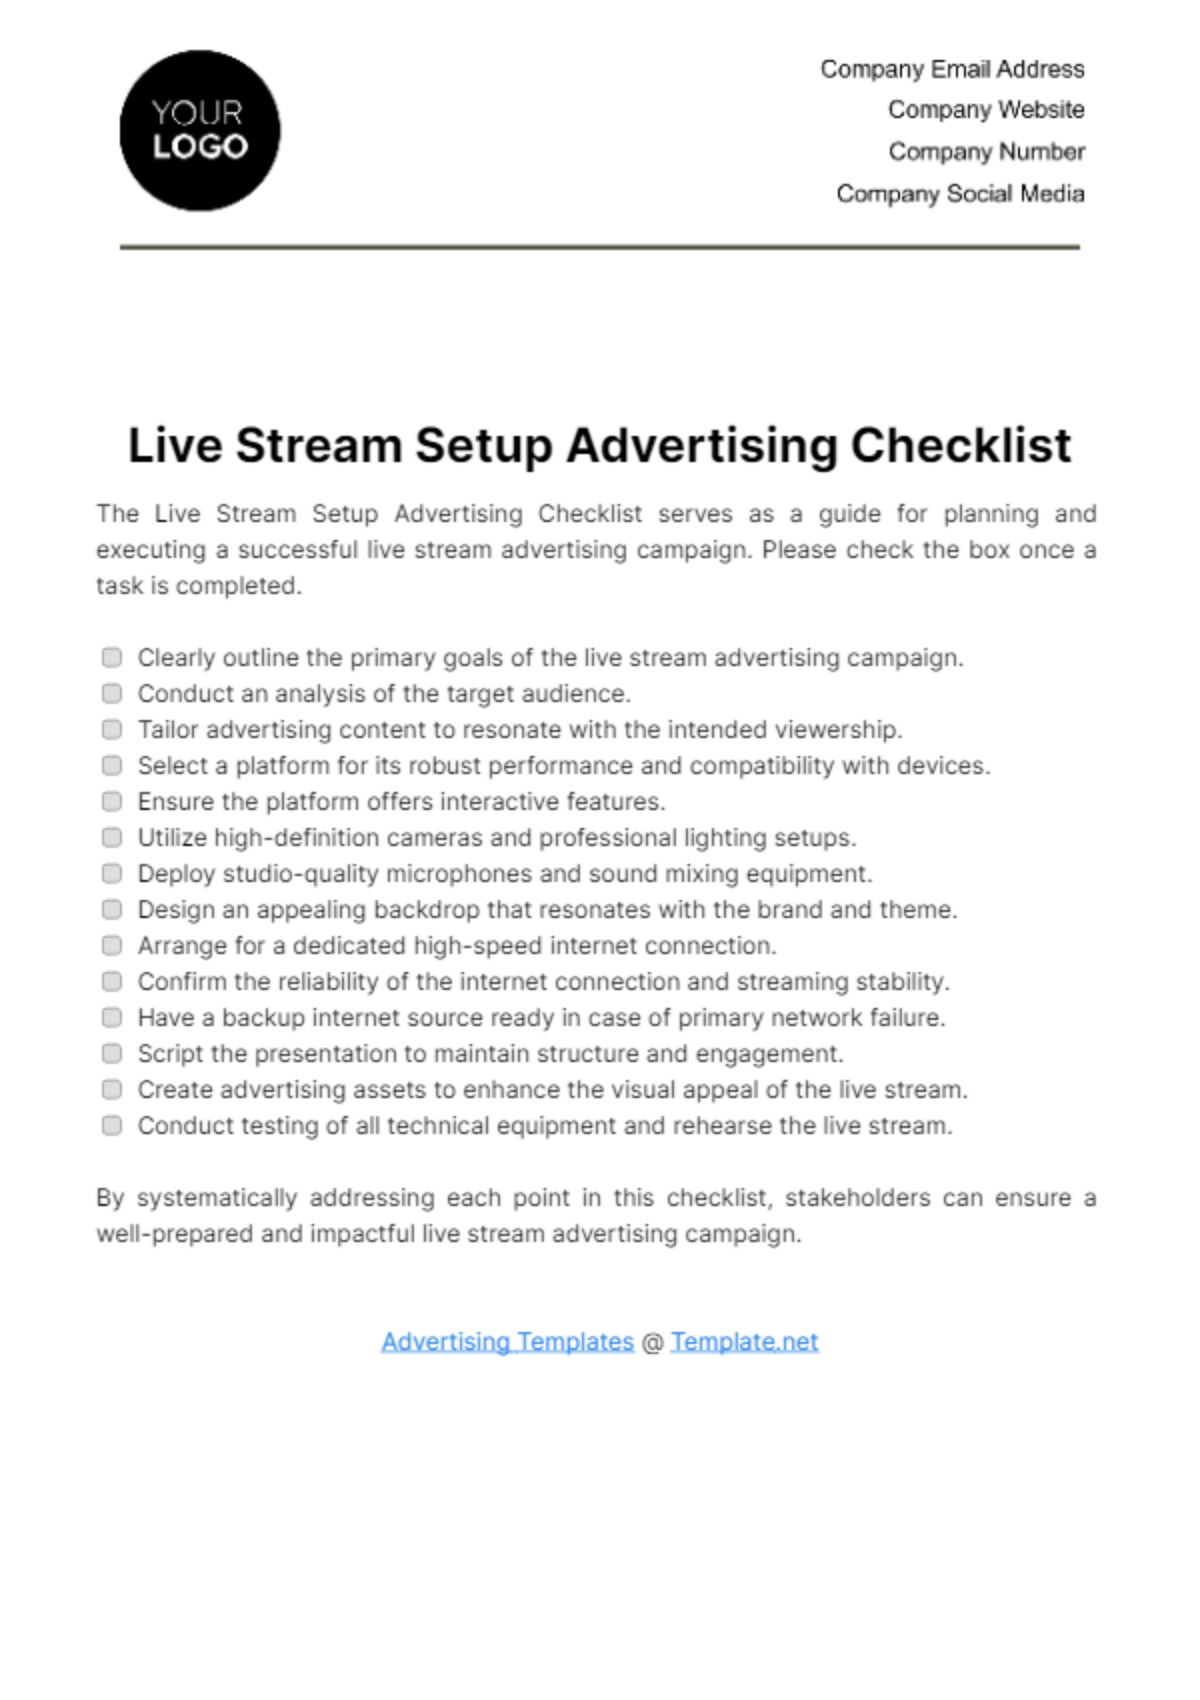 Free Live Stream Setup Advertising Checklist Template